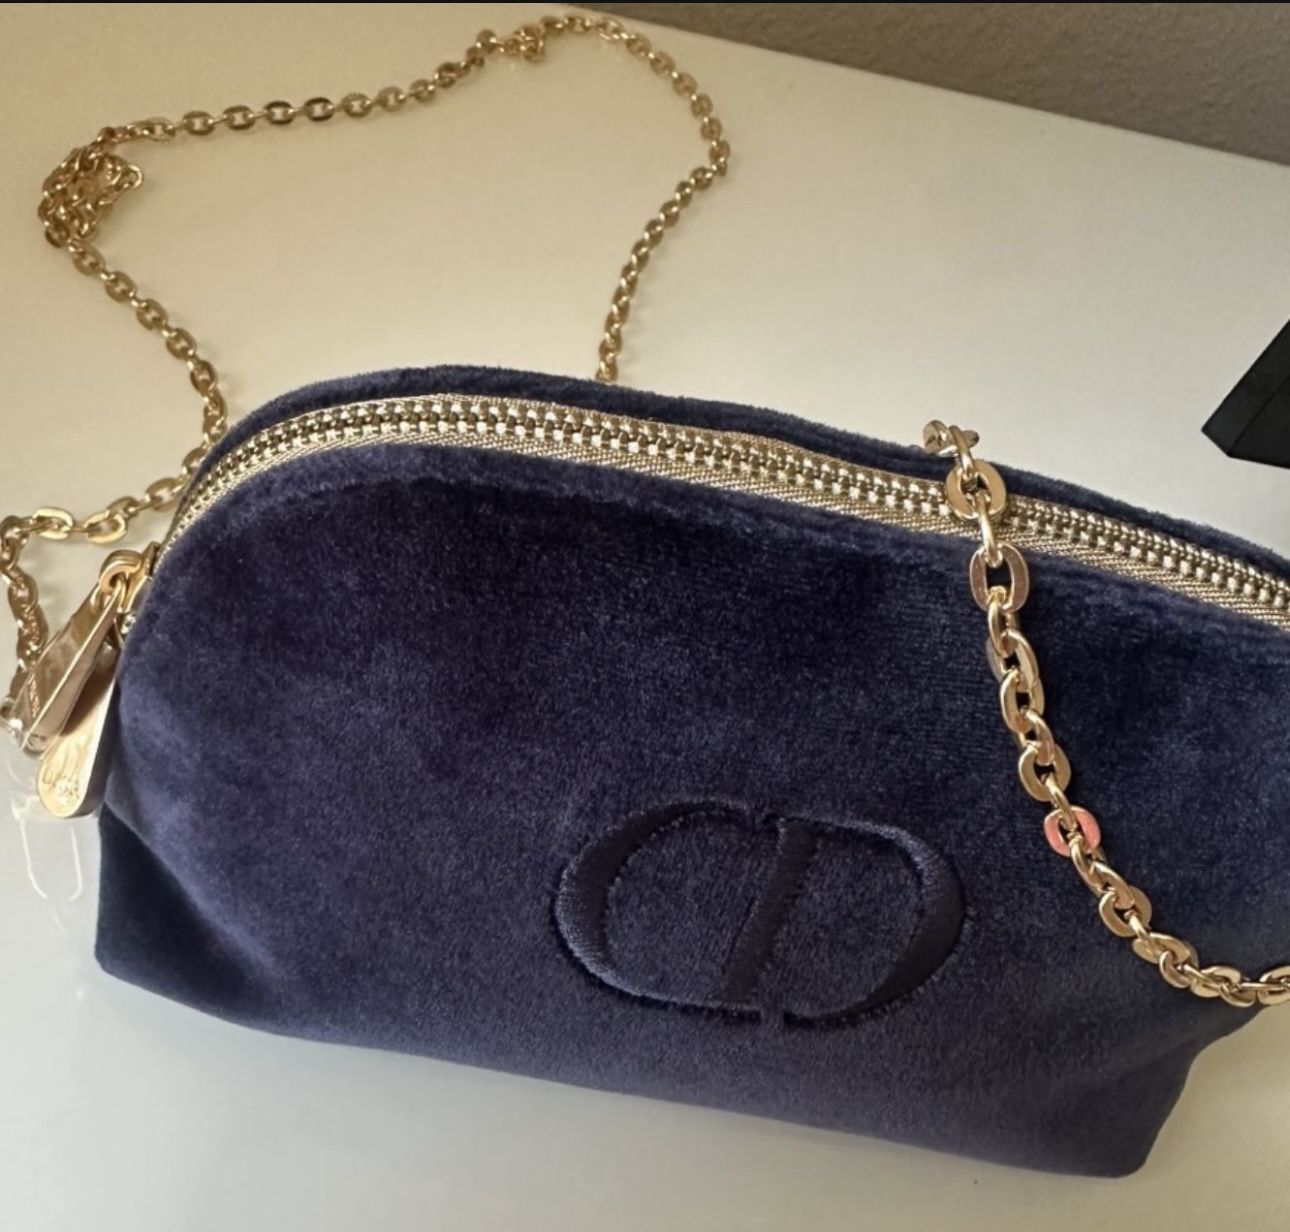 Dior Minaudière blue purse.